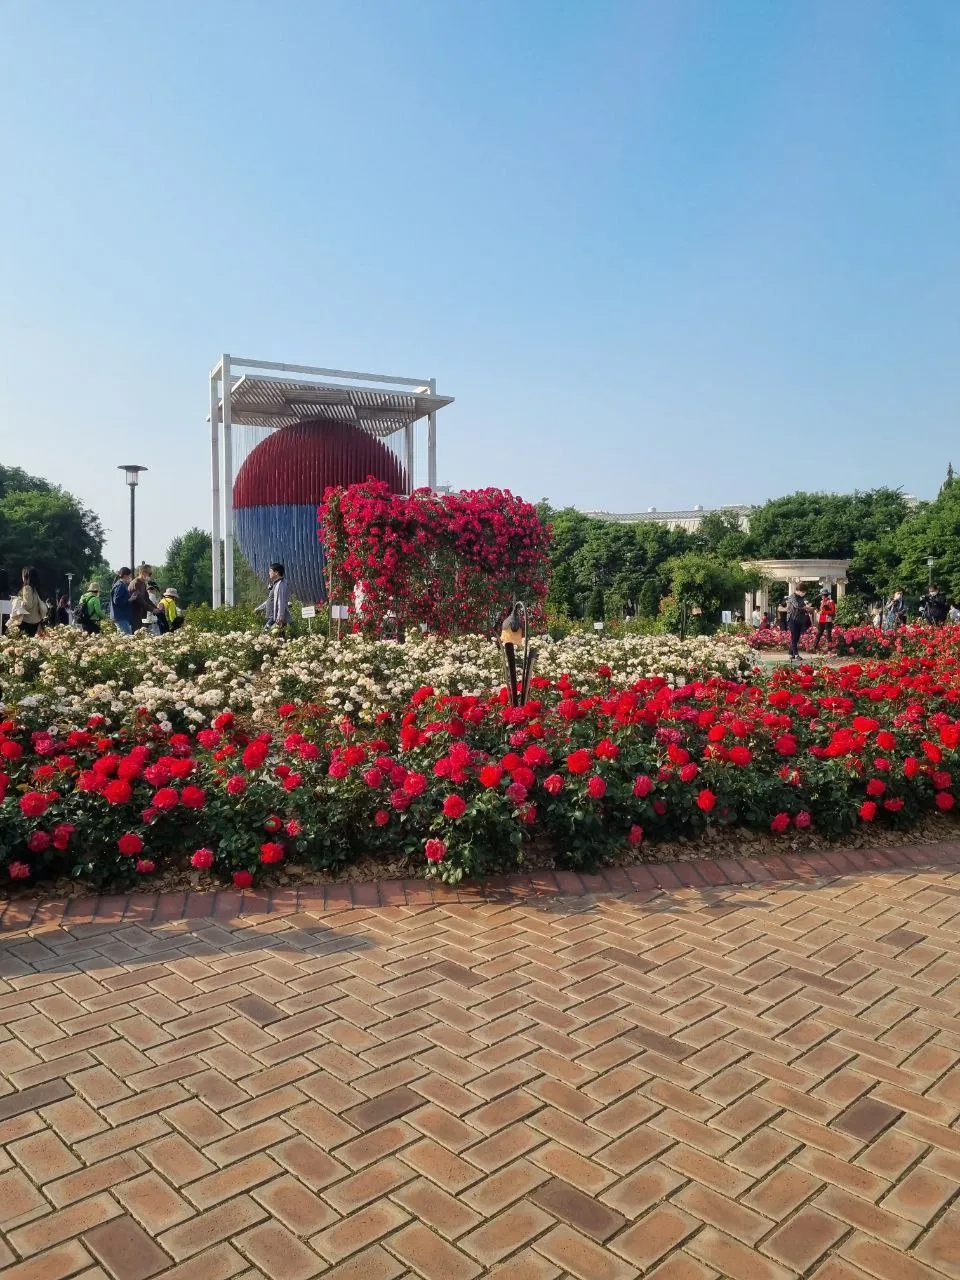 Rose Festival in Korea
Фестиваль роз в Корее 2022